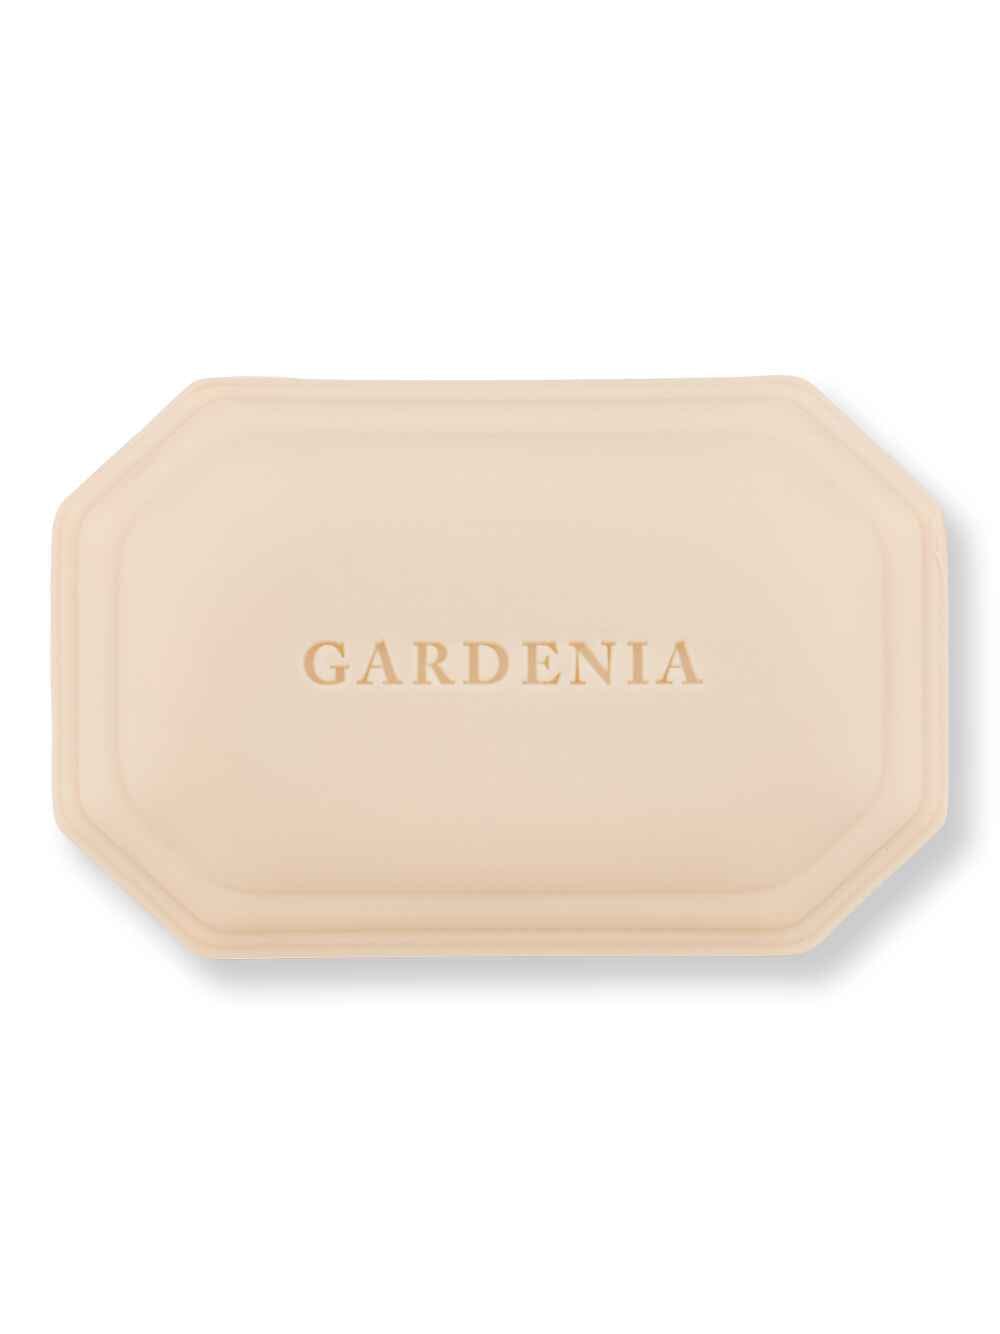 Caswell Massey Caswell Massey Gardenia Luxury Bar Soap 3.5 oz Bar Soaps 